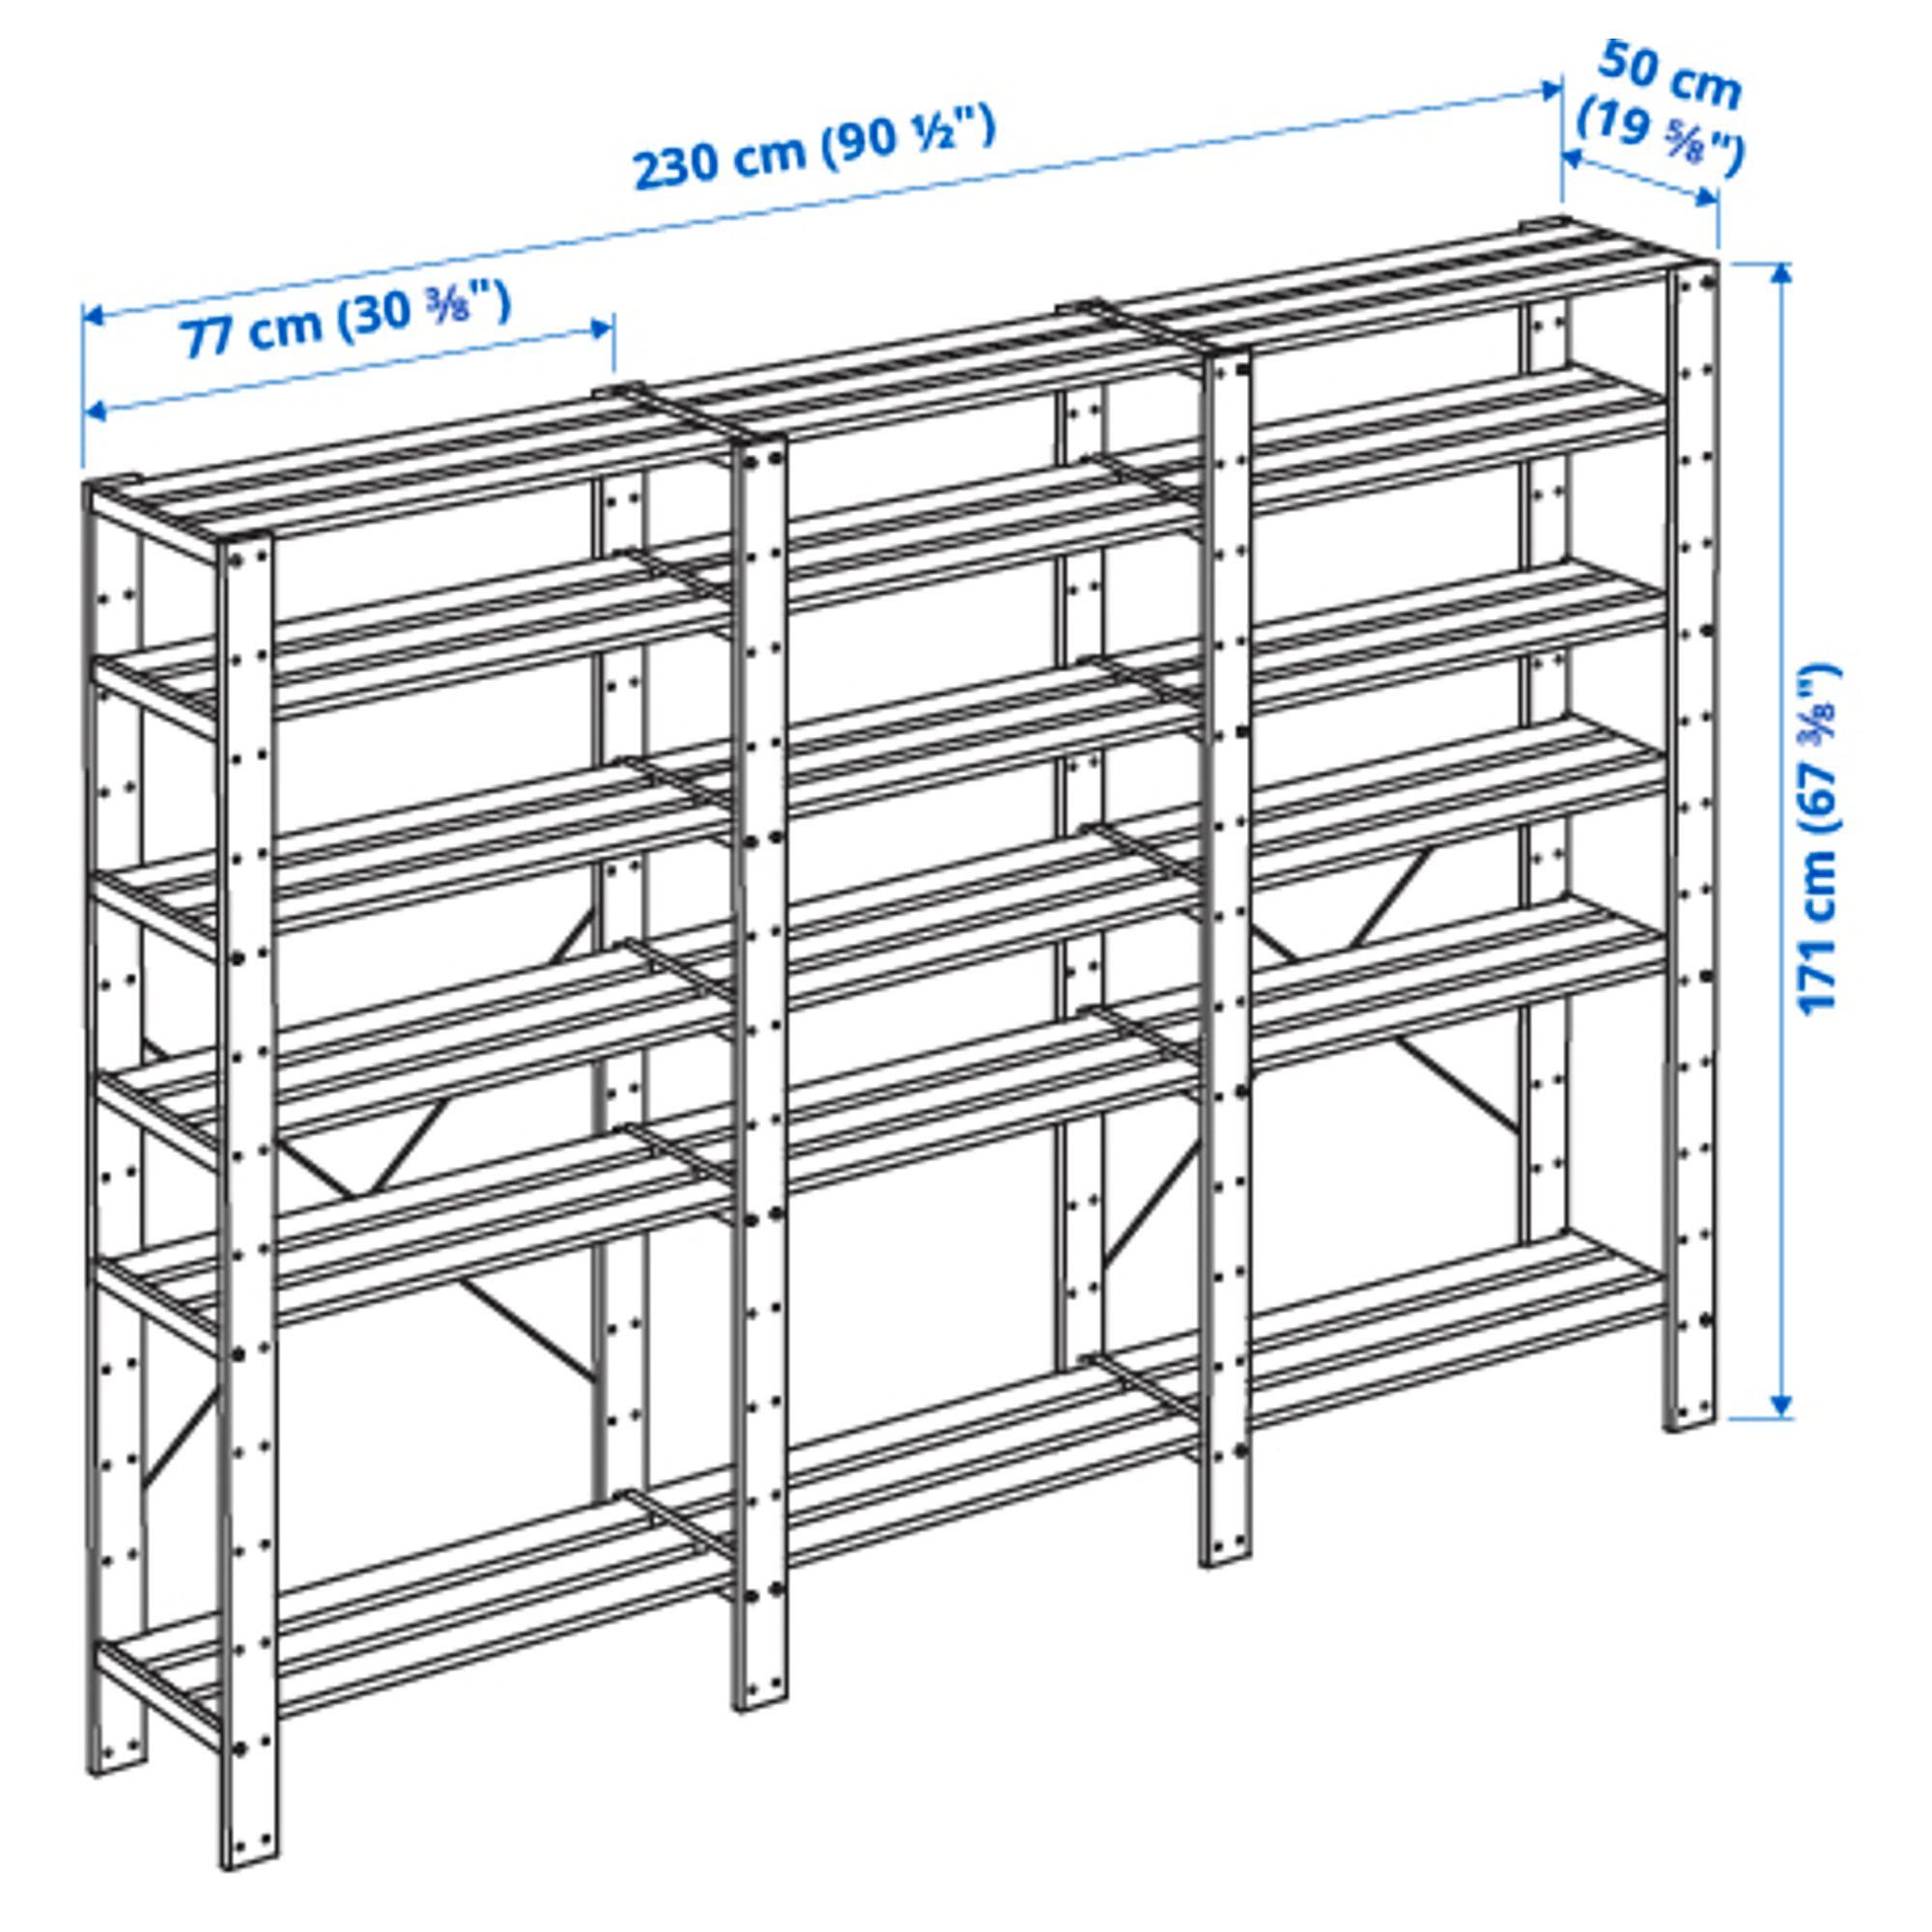 HEJNE 3 sections/shelves